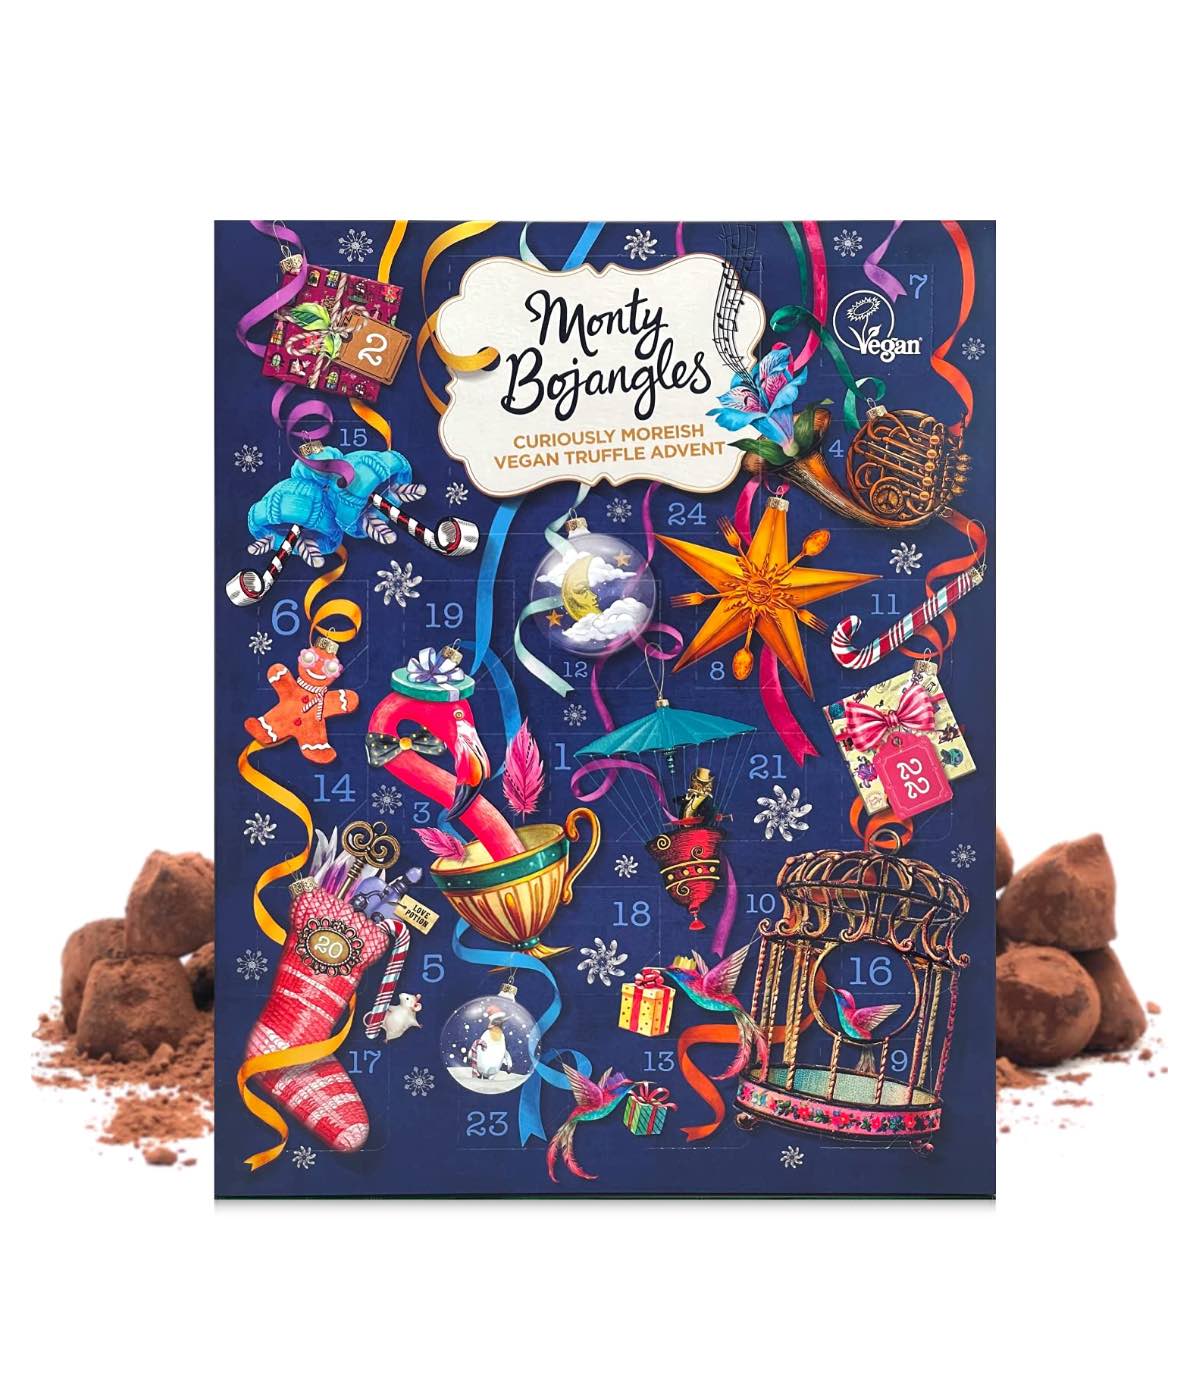 Decadent belgian chocolates in a festively designed Monty Bojangles advent calendar that's labeled vegan.